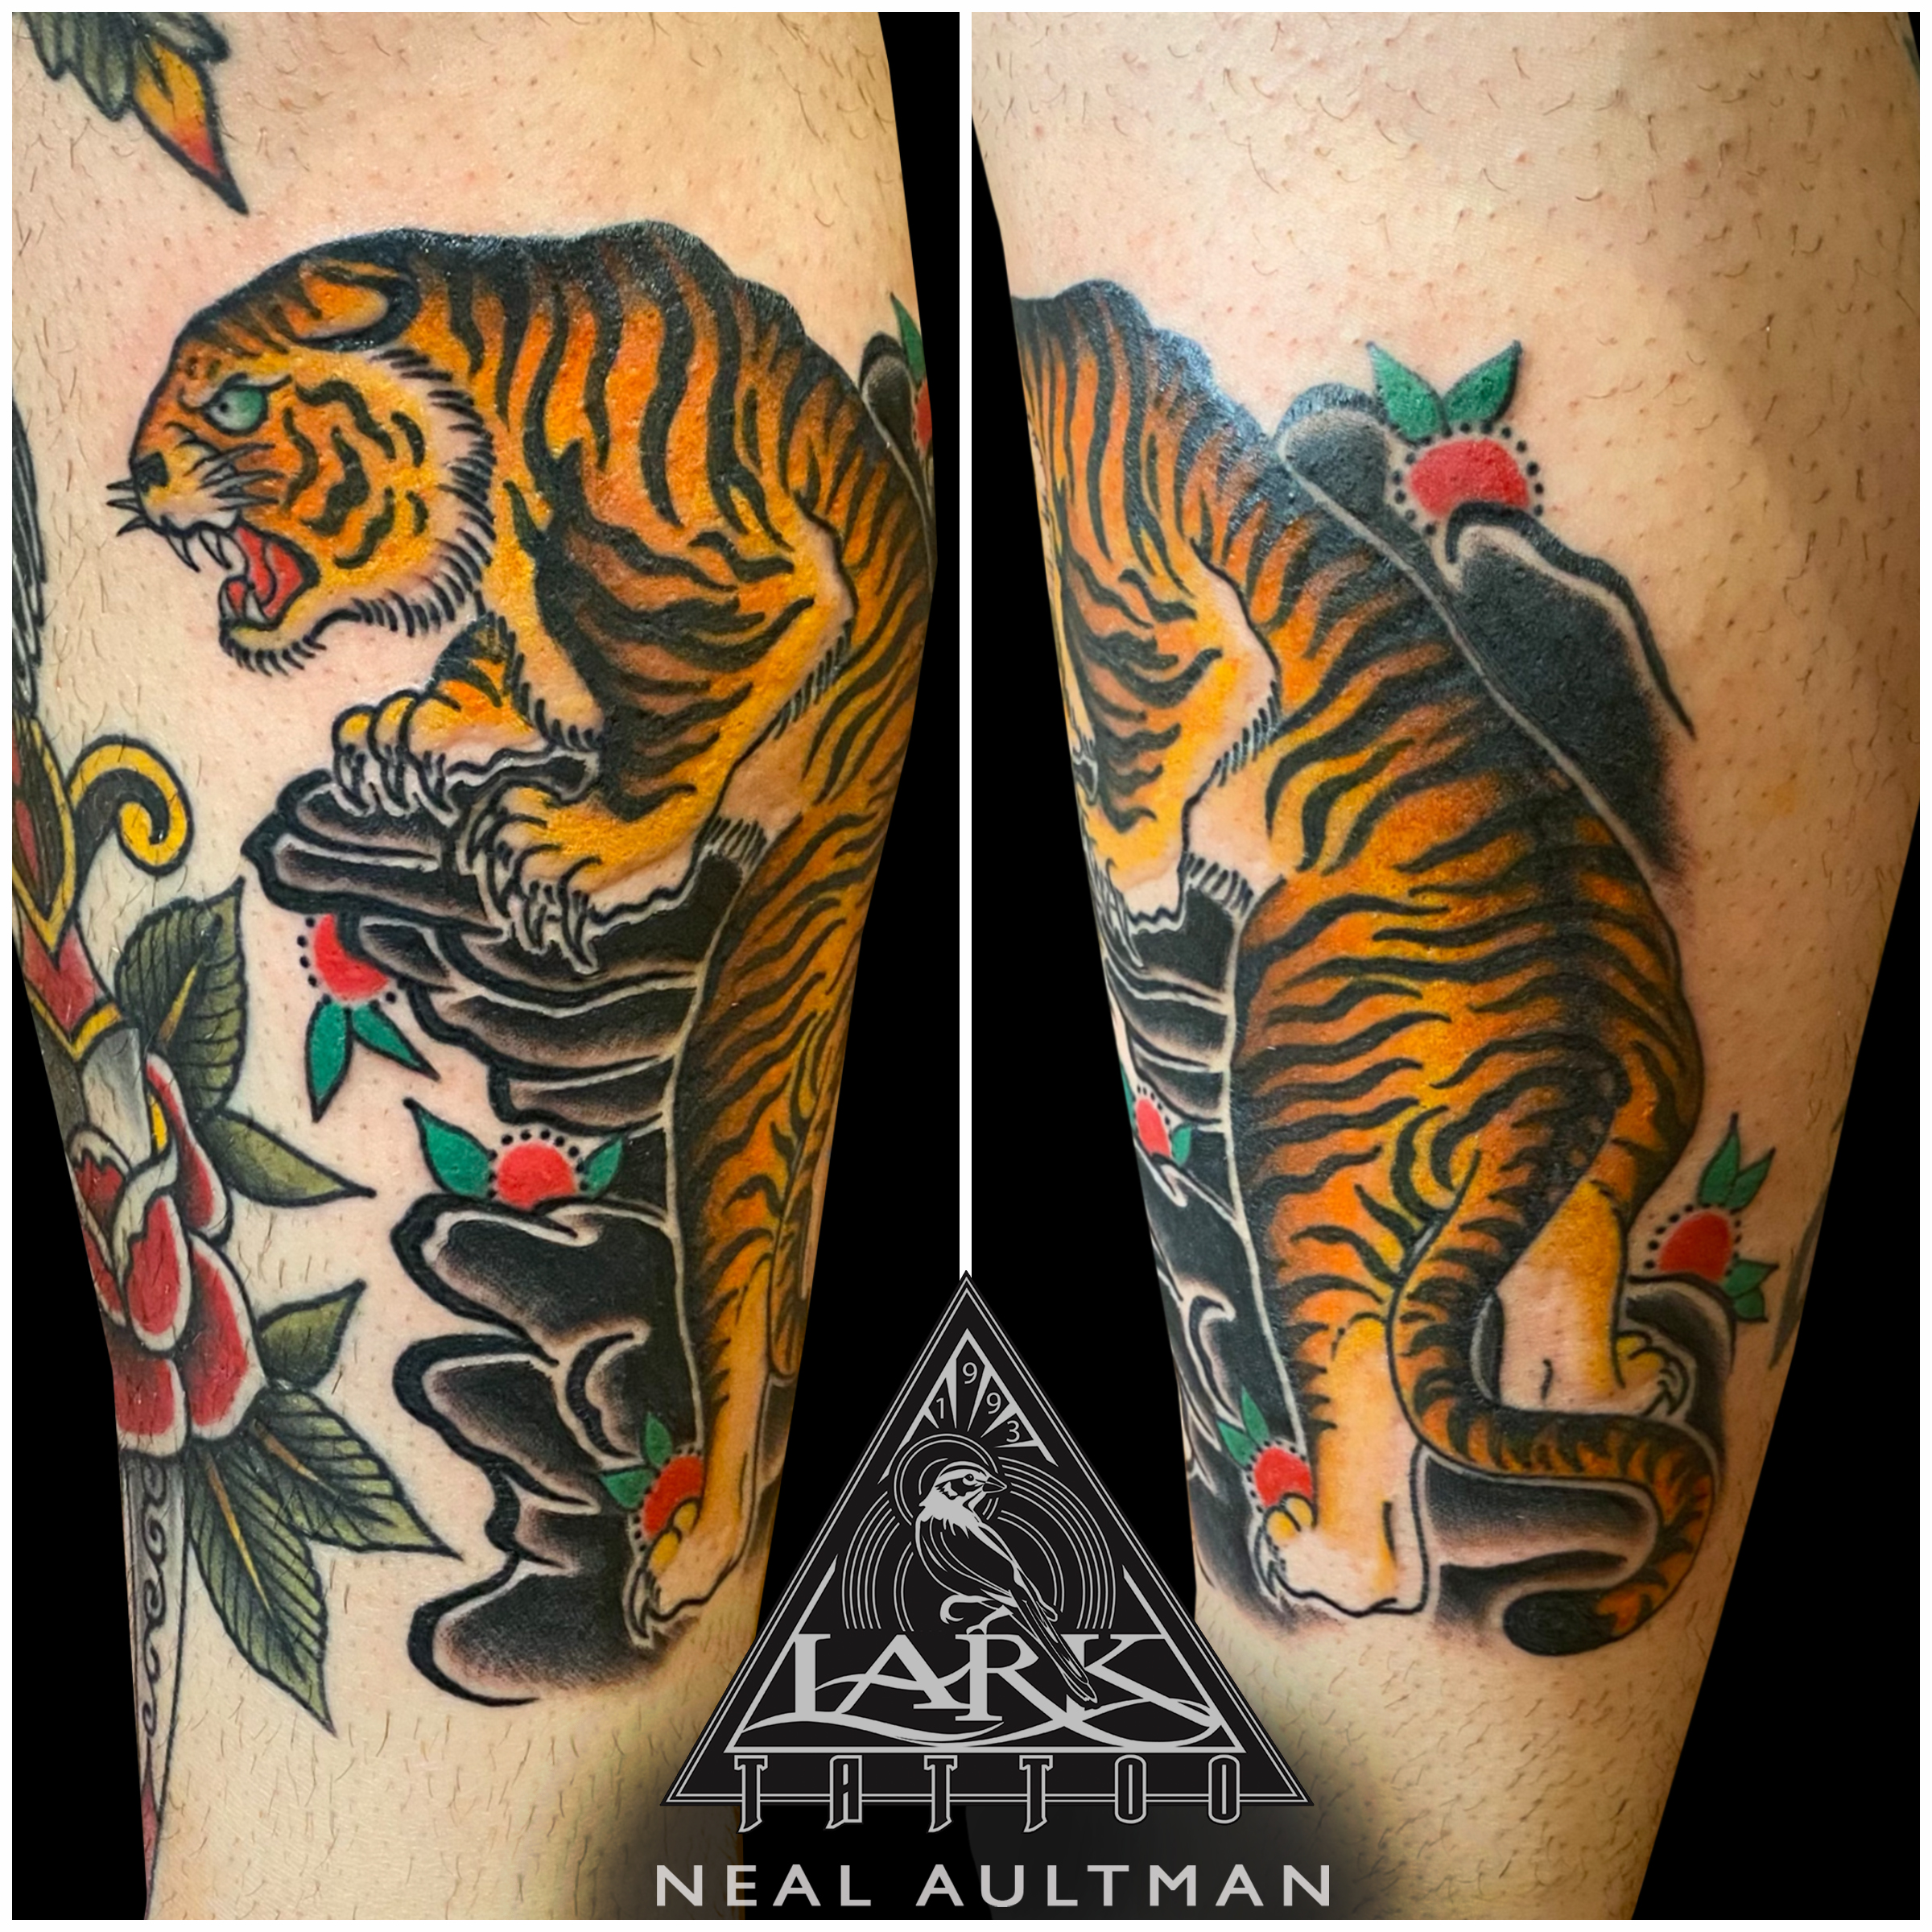 #LarkTattoo #NealAultman #NealAultmanLarkTattoo #Tattoo #Tattoos #TattooArtist #Tattoist #Tattooer #LongIslandTattooArtist #LongIslandTattooer #LongIslandTattoo #Traditional #TraditionalTattoo #TradTat #Tiger #TigerTattoo #ColorTattoo #TattooOfTheDay #Tat #Tats #Tatts #Tatted #Inked #Ink #TattooInk #AmazingInk #AmazingTattoo #BodyArt #LarkTattooWestbury #Westbury #LongIsland #NY #NewYork #USA #Art #Tattedup #InkedUp #LarkTattoos